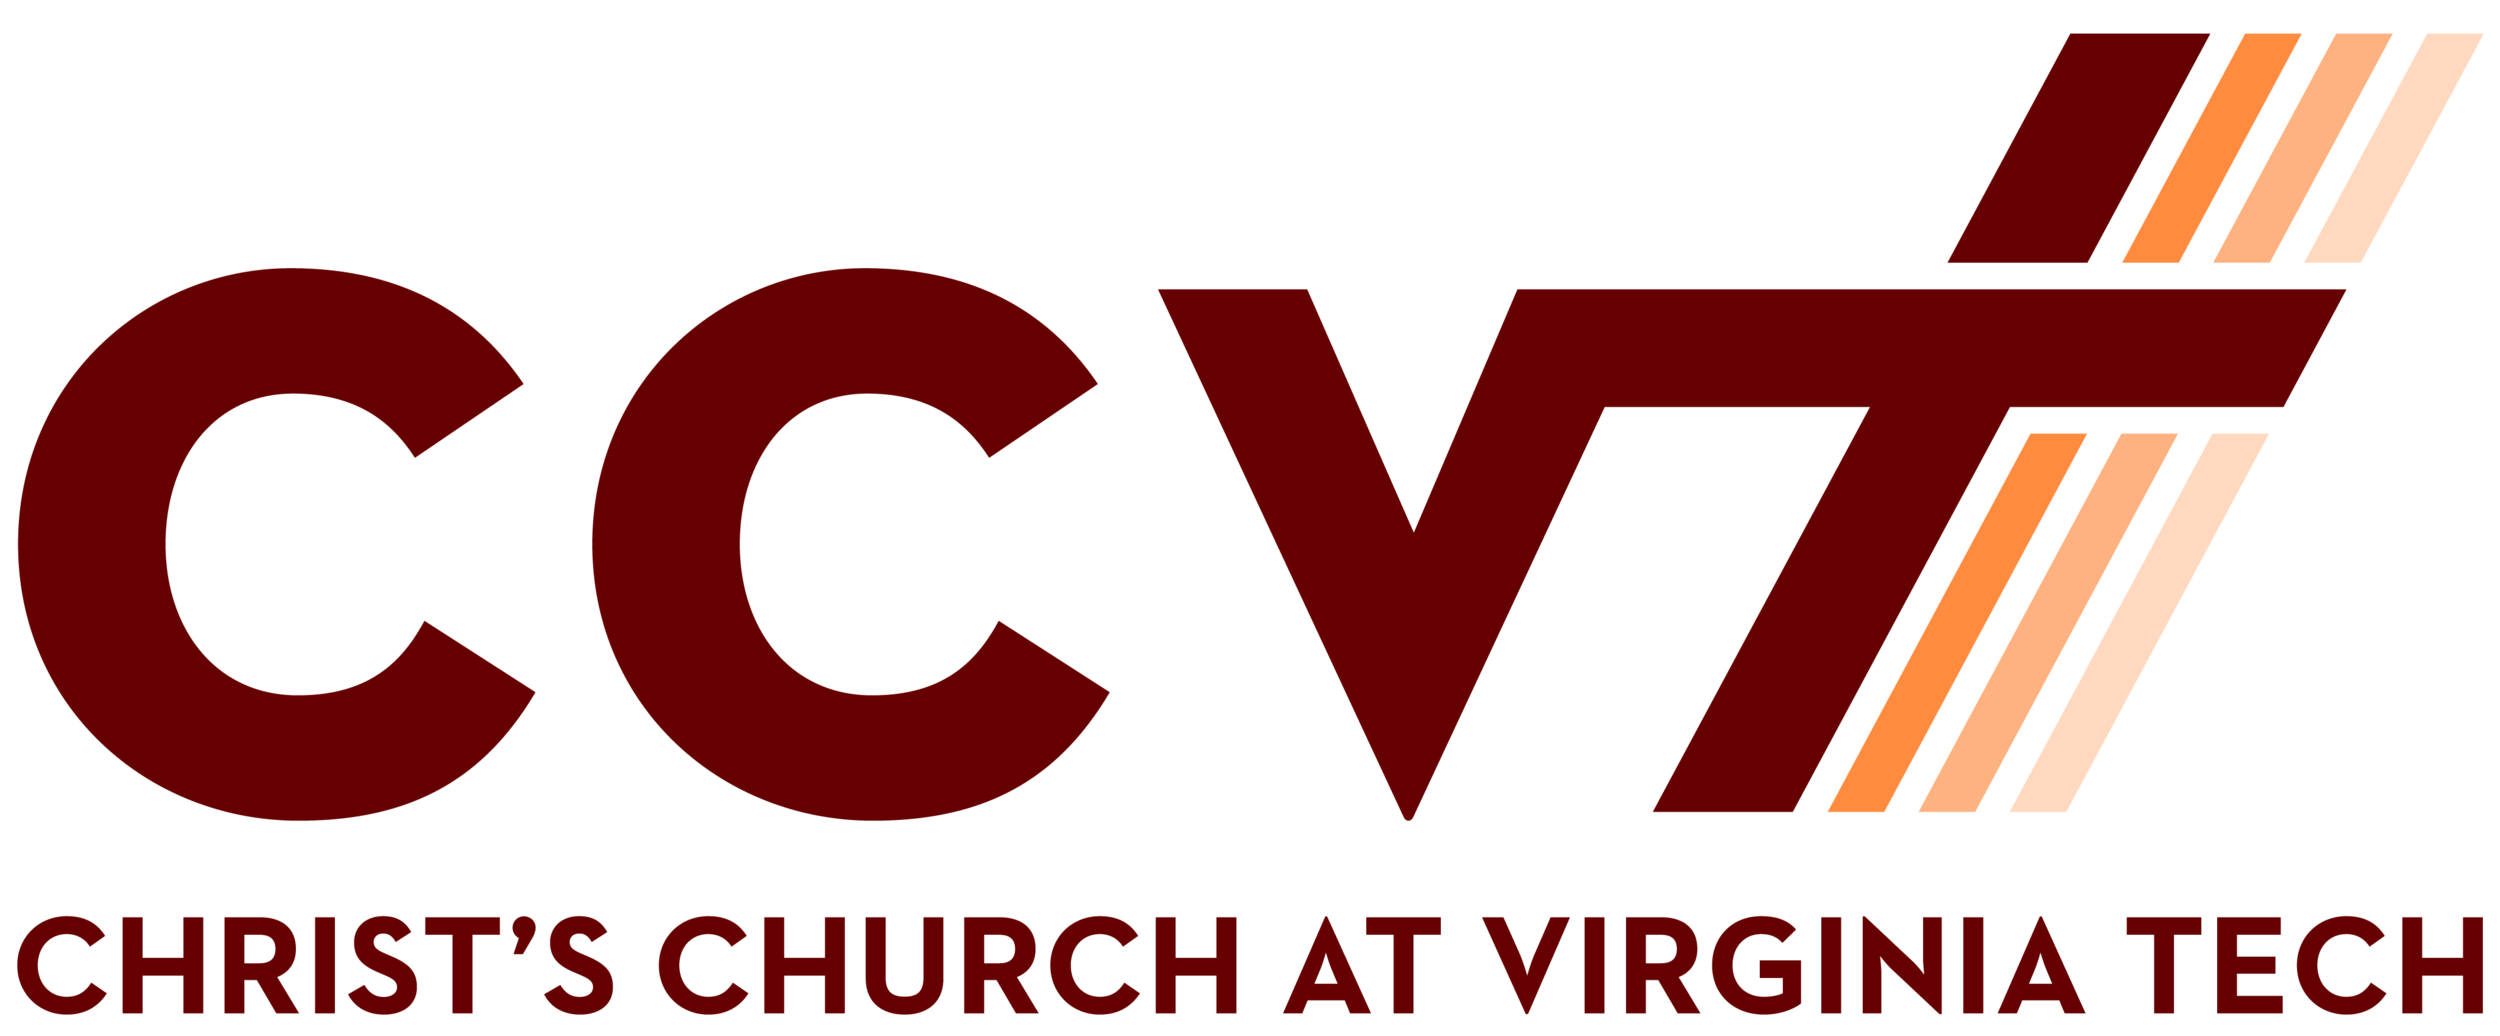 Christs Church at Virginia Tech